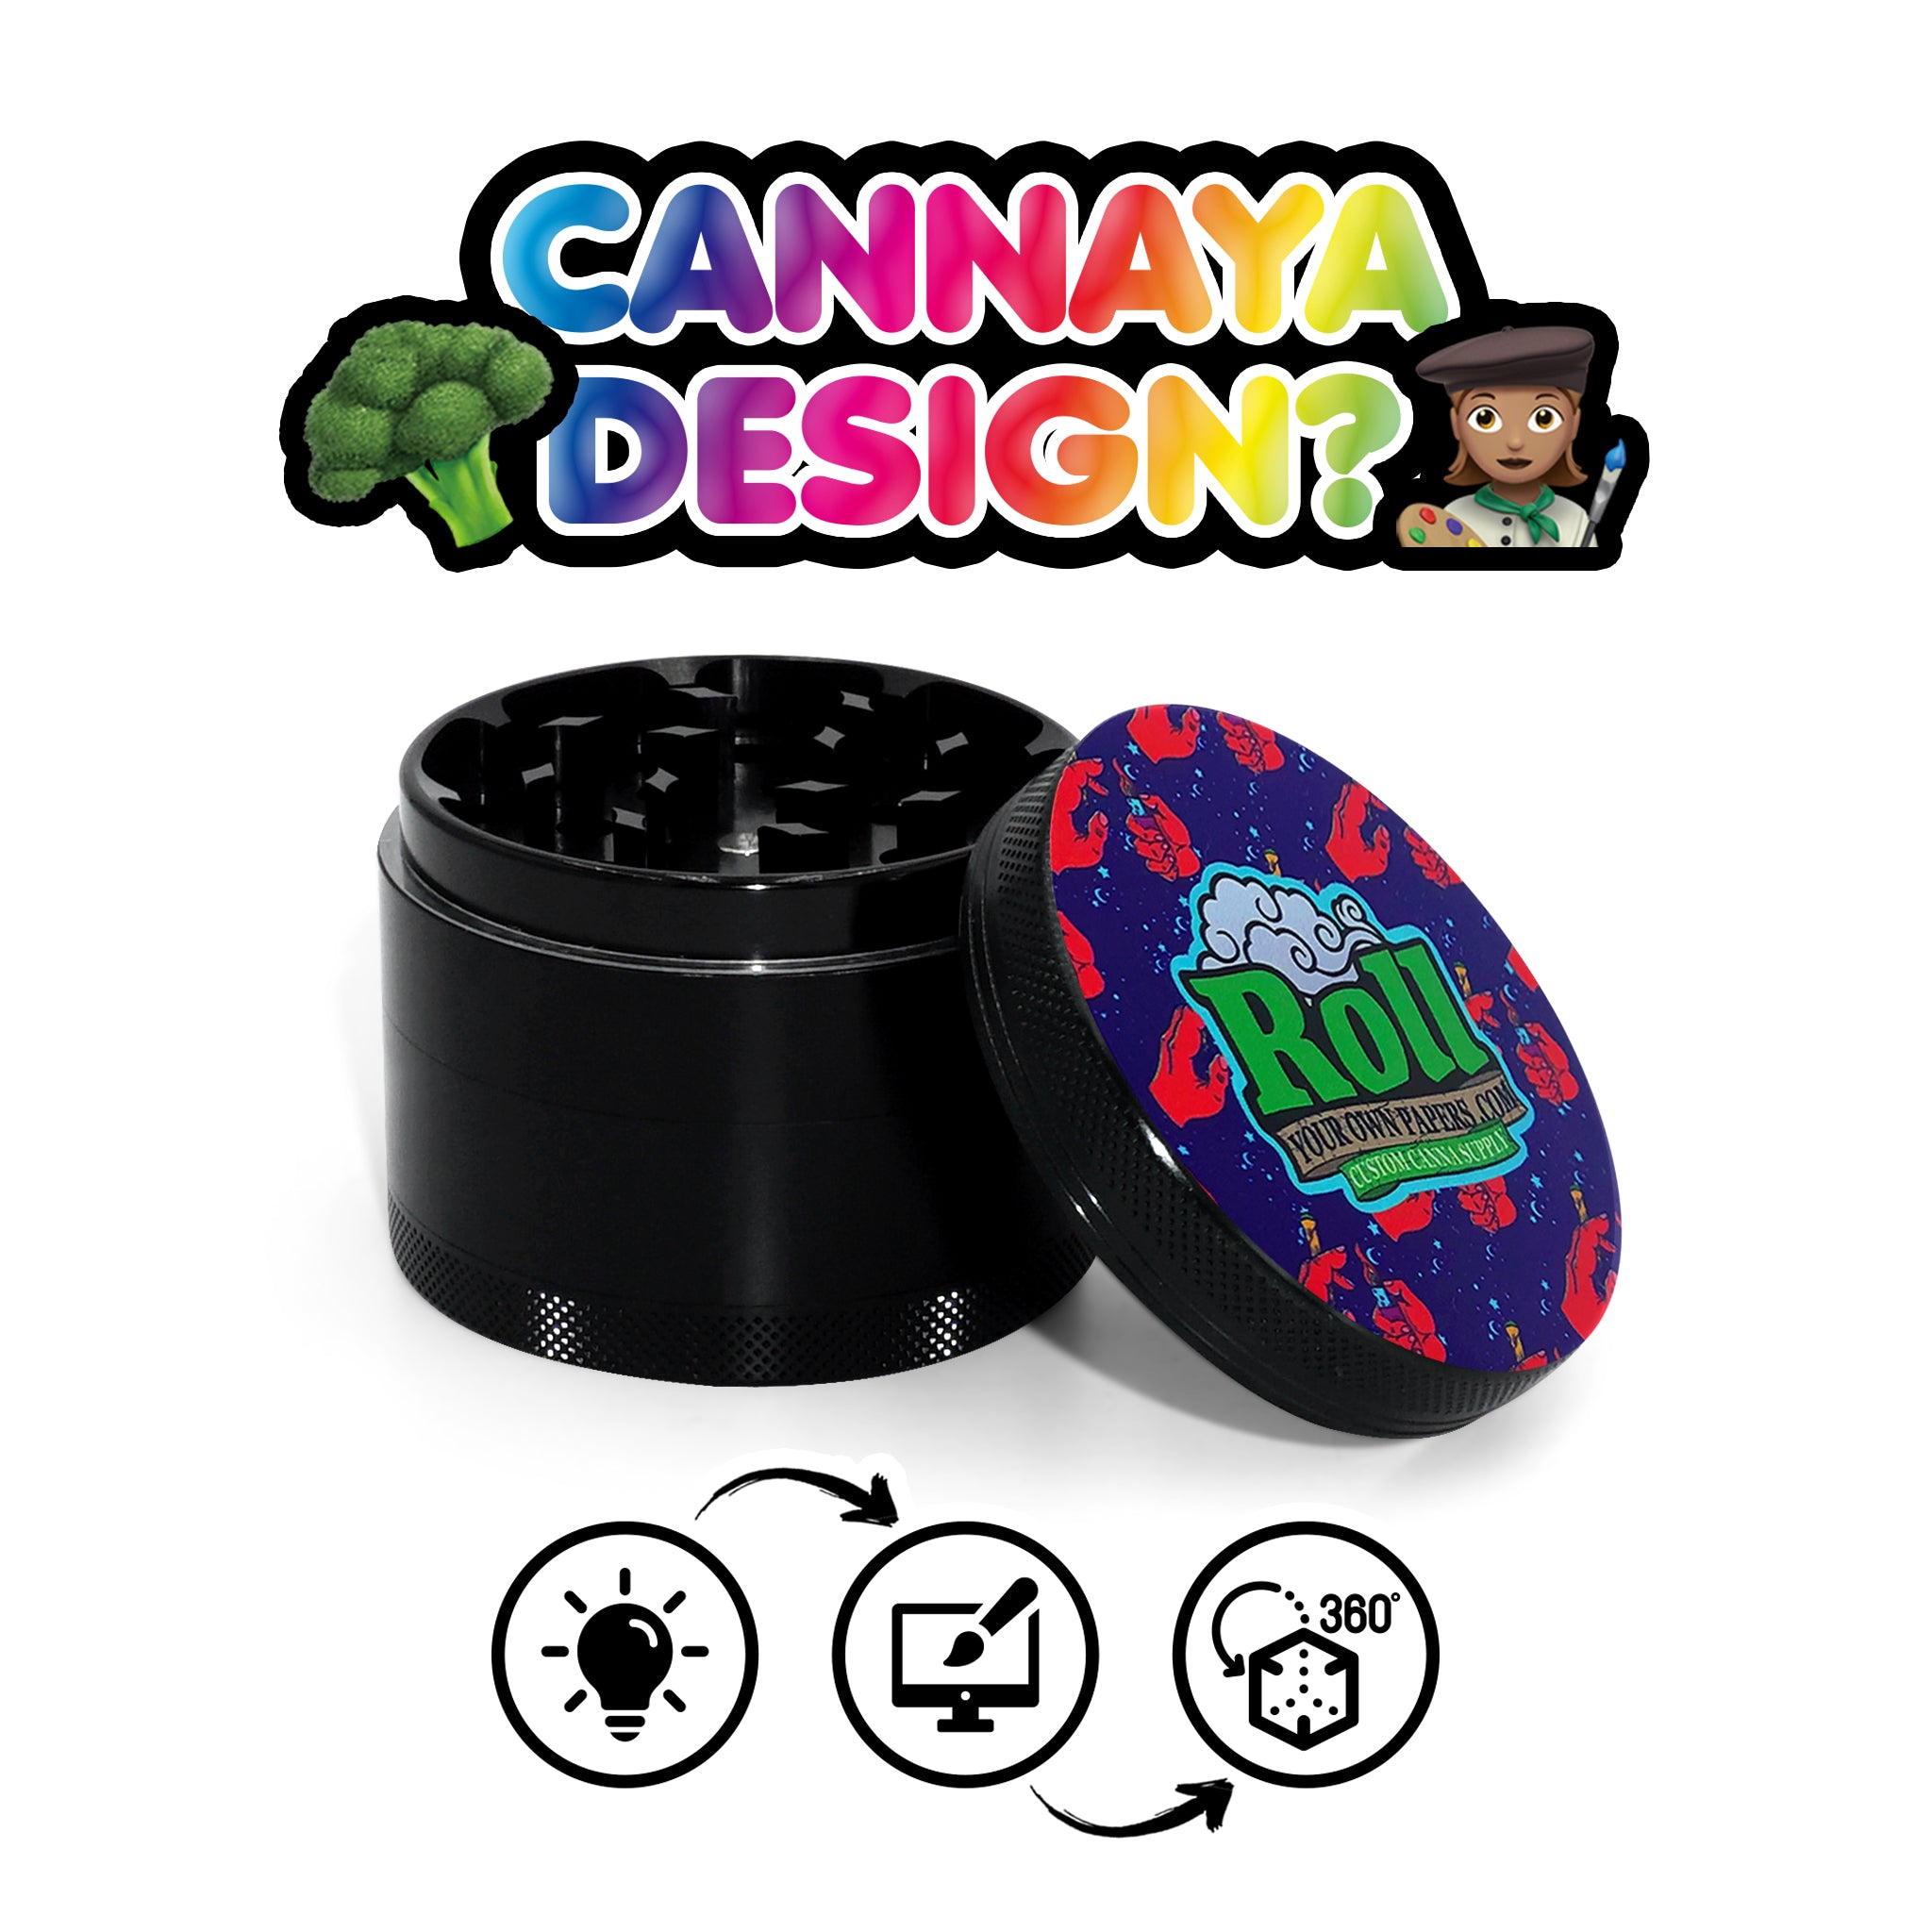 🥦 CANNAYA DESIGN? 👩‍🎨 - Custom Grinder With Full Top Printing